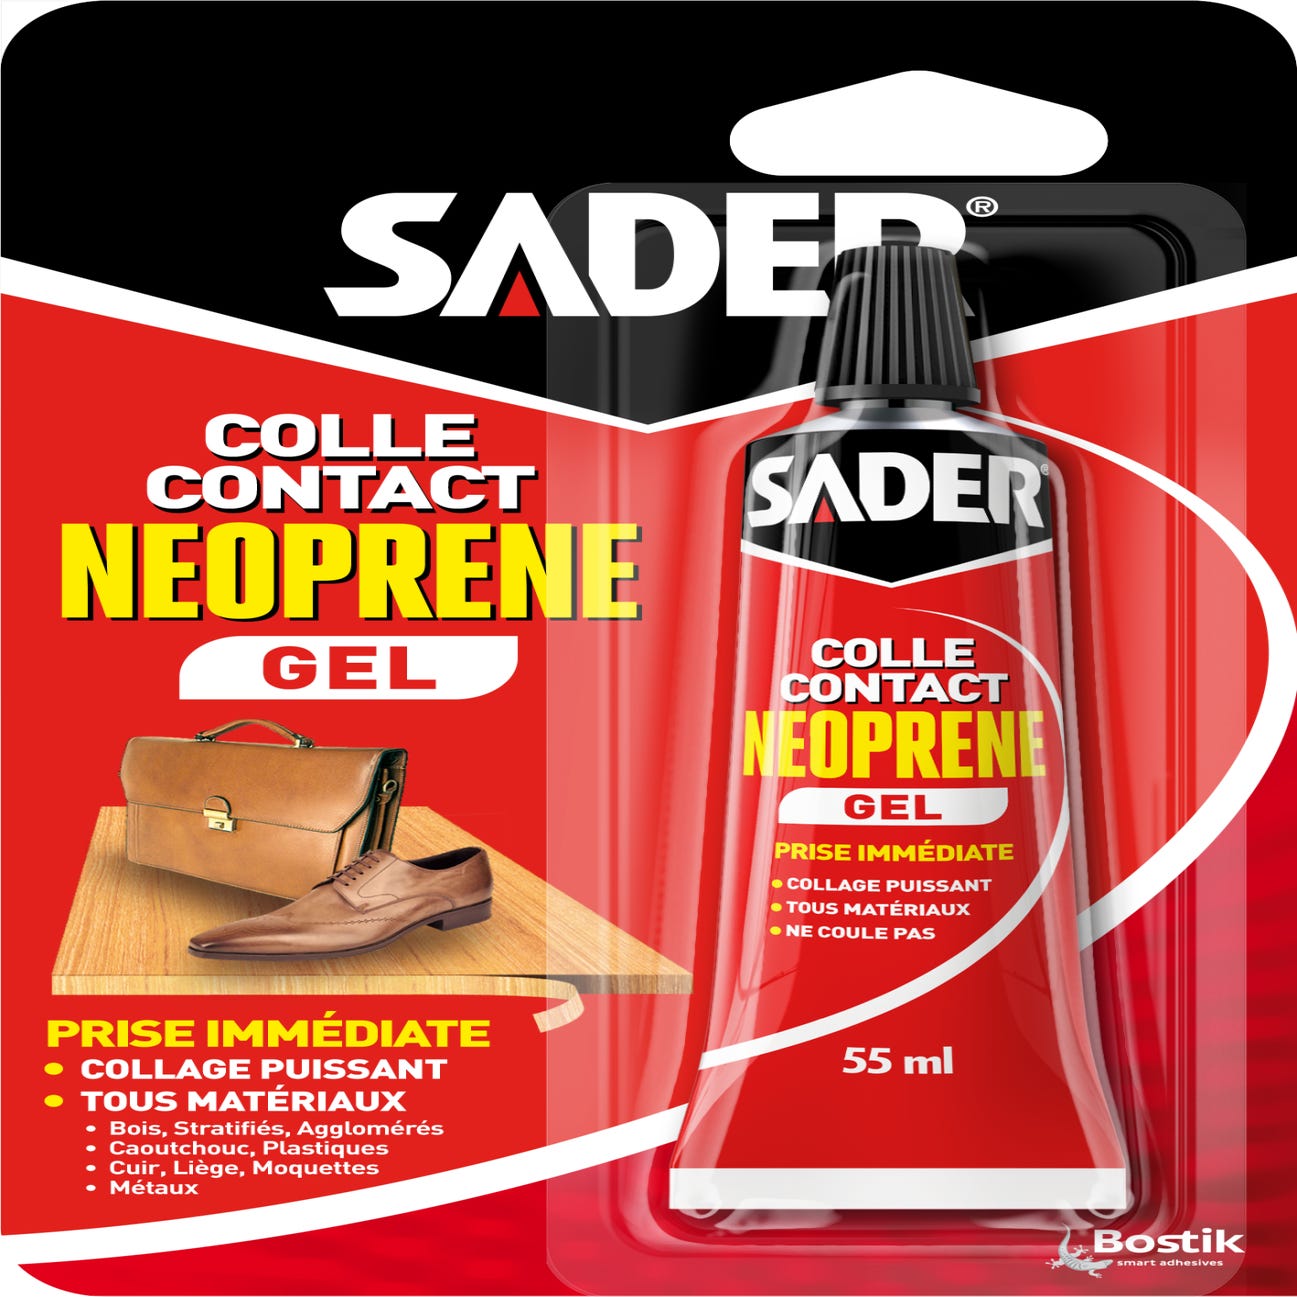 Colle gel contact néoprène SADER - Prise immédiate - 55ml - Espace Bricolage